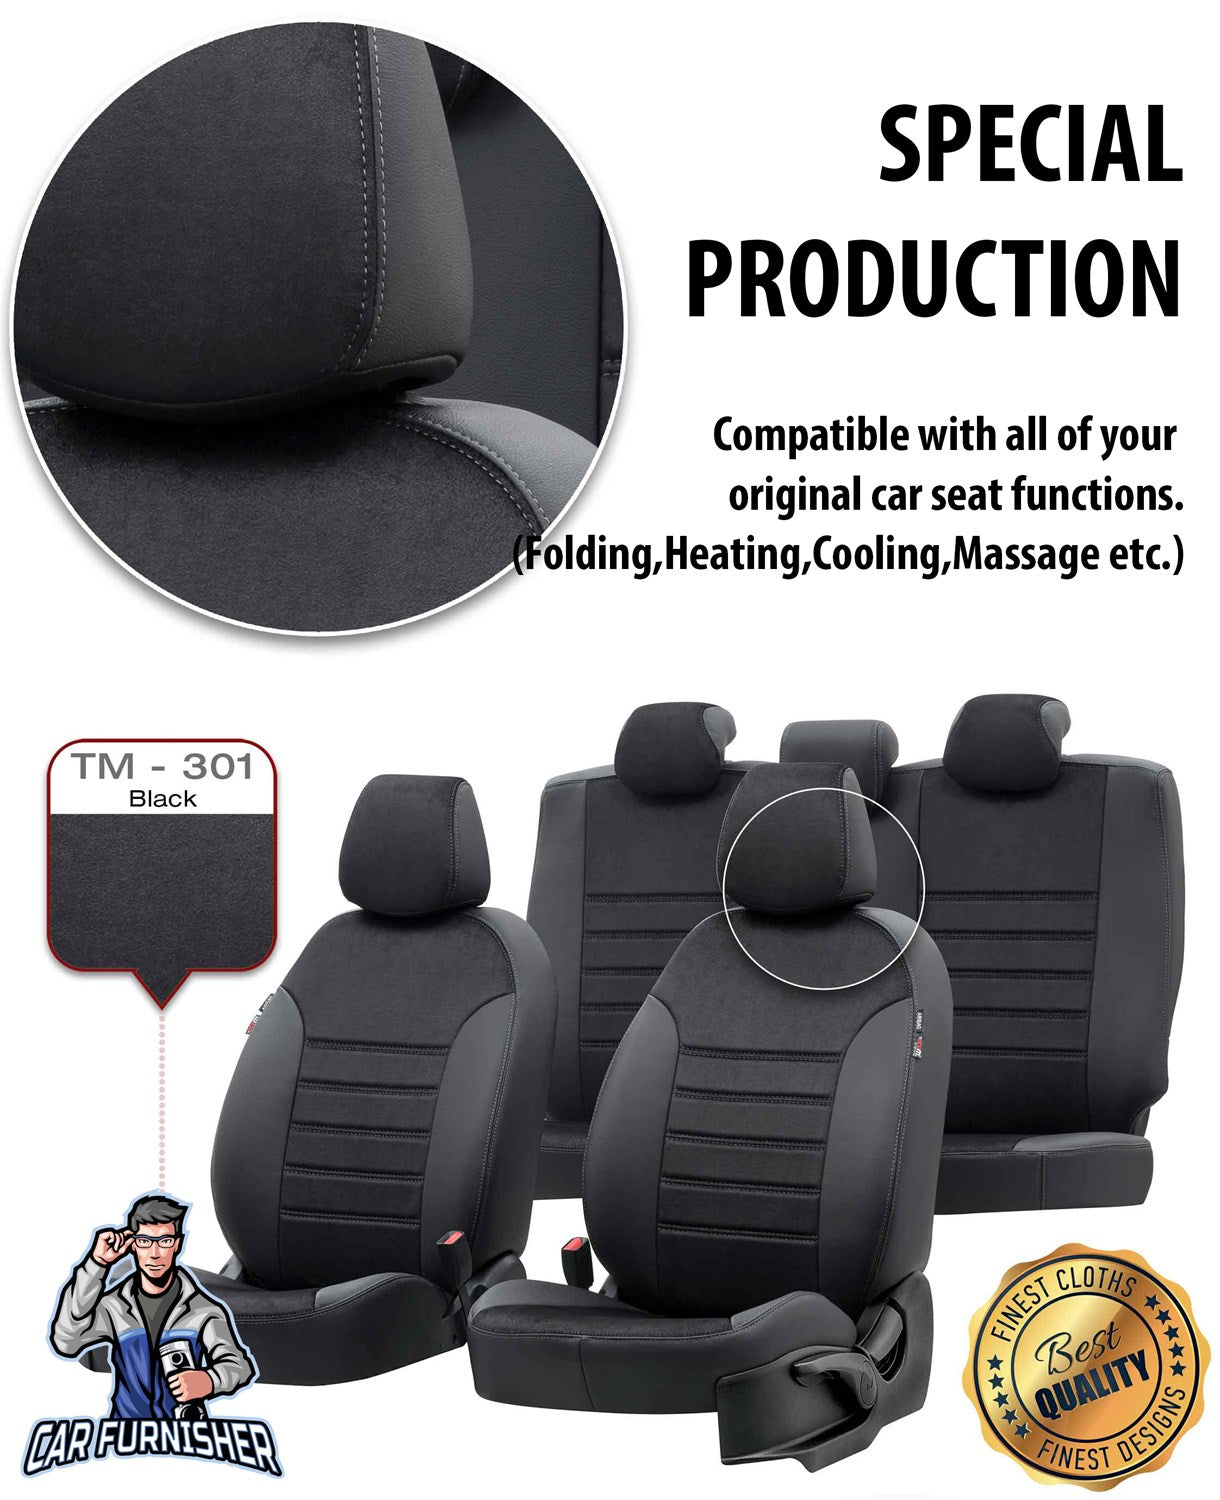 Daihatsu Materia Seat Covers Milano Suede Design Beige Leather & Suede Fabric